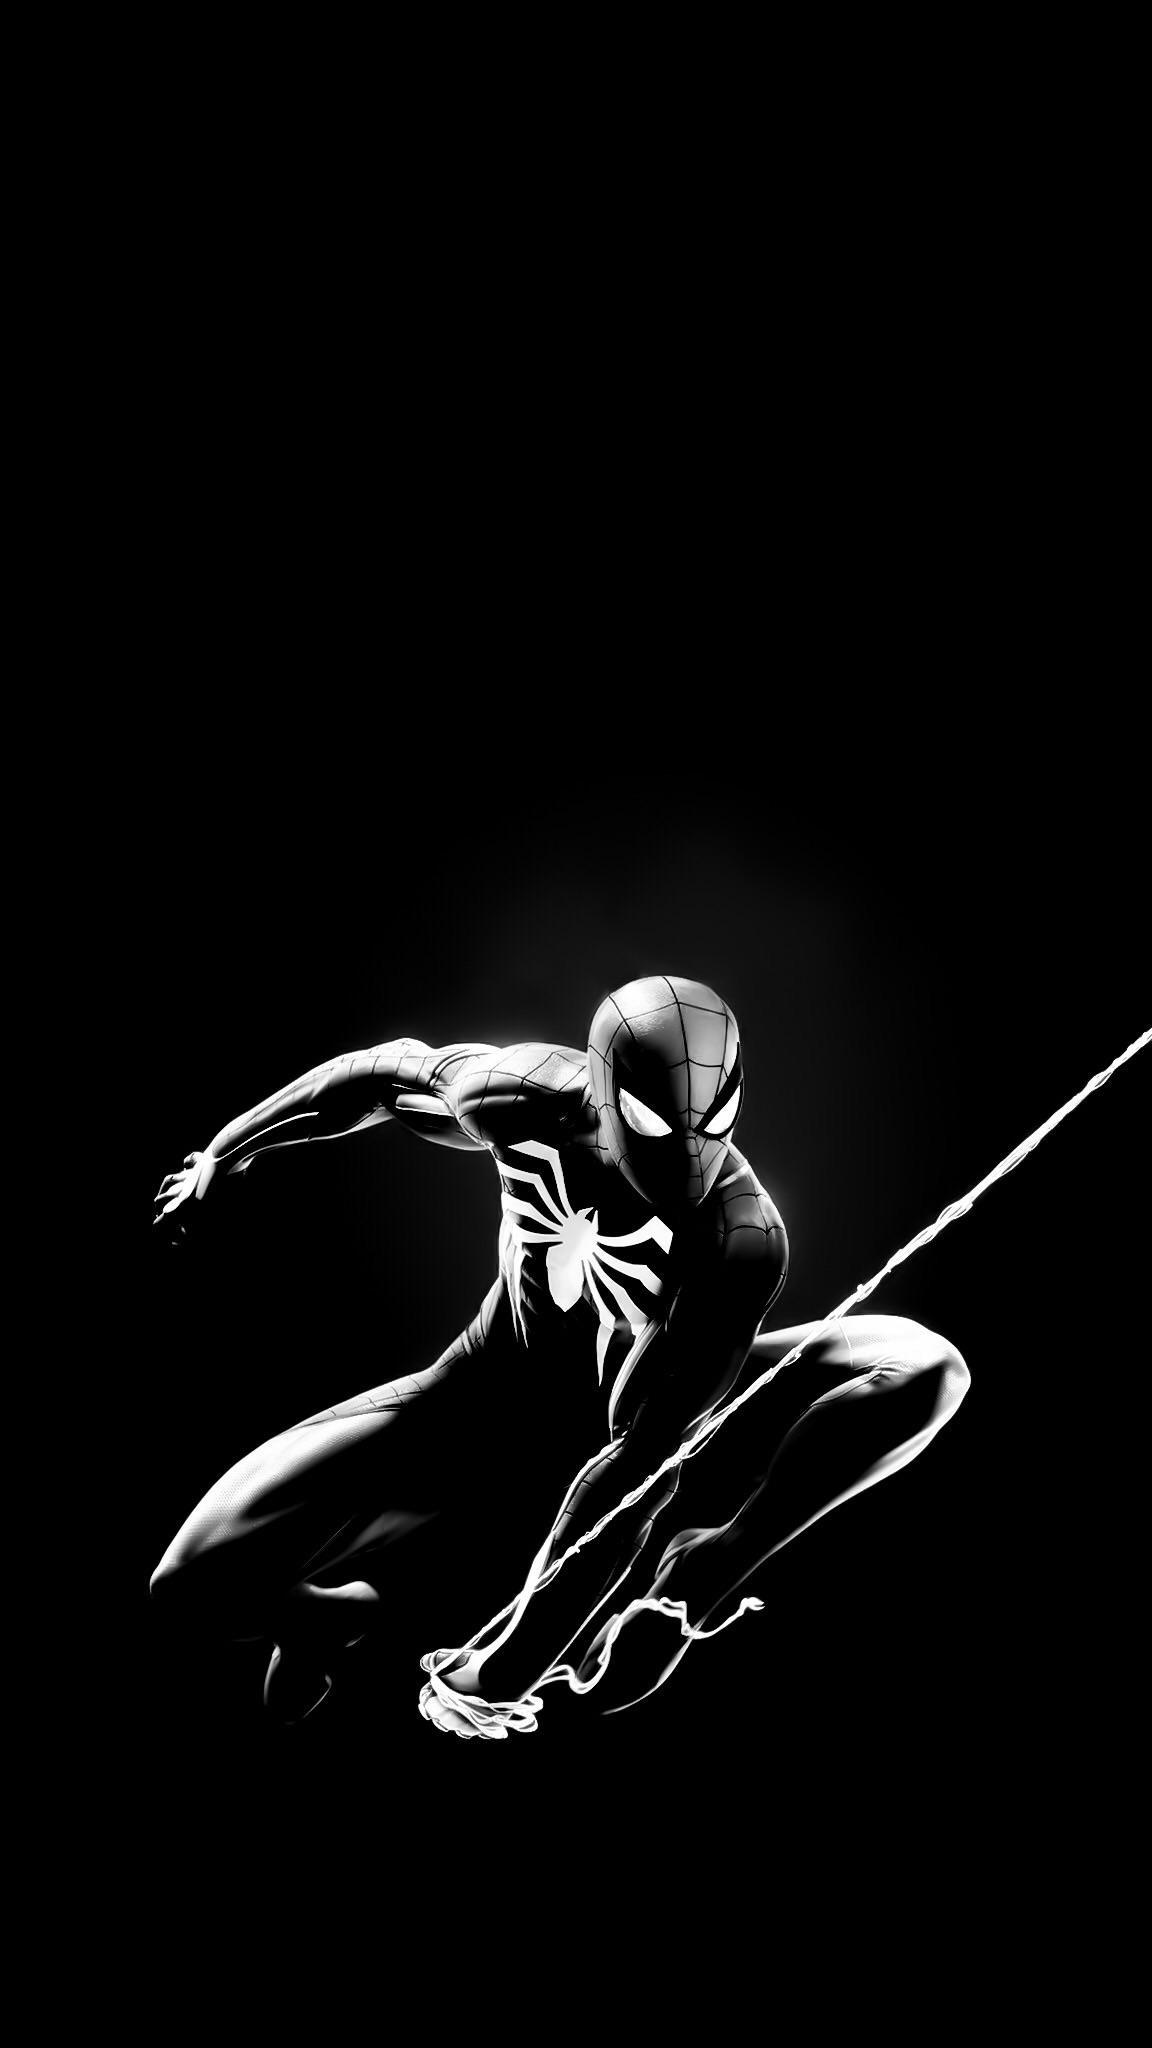 Black And White Spider Man Wallpaper Free Black And White Spider Man Background